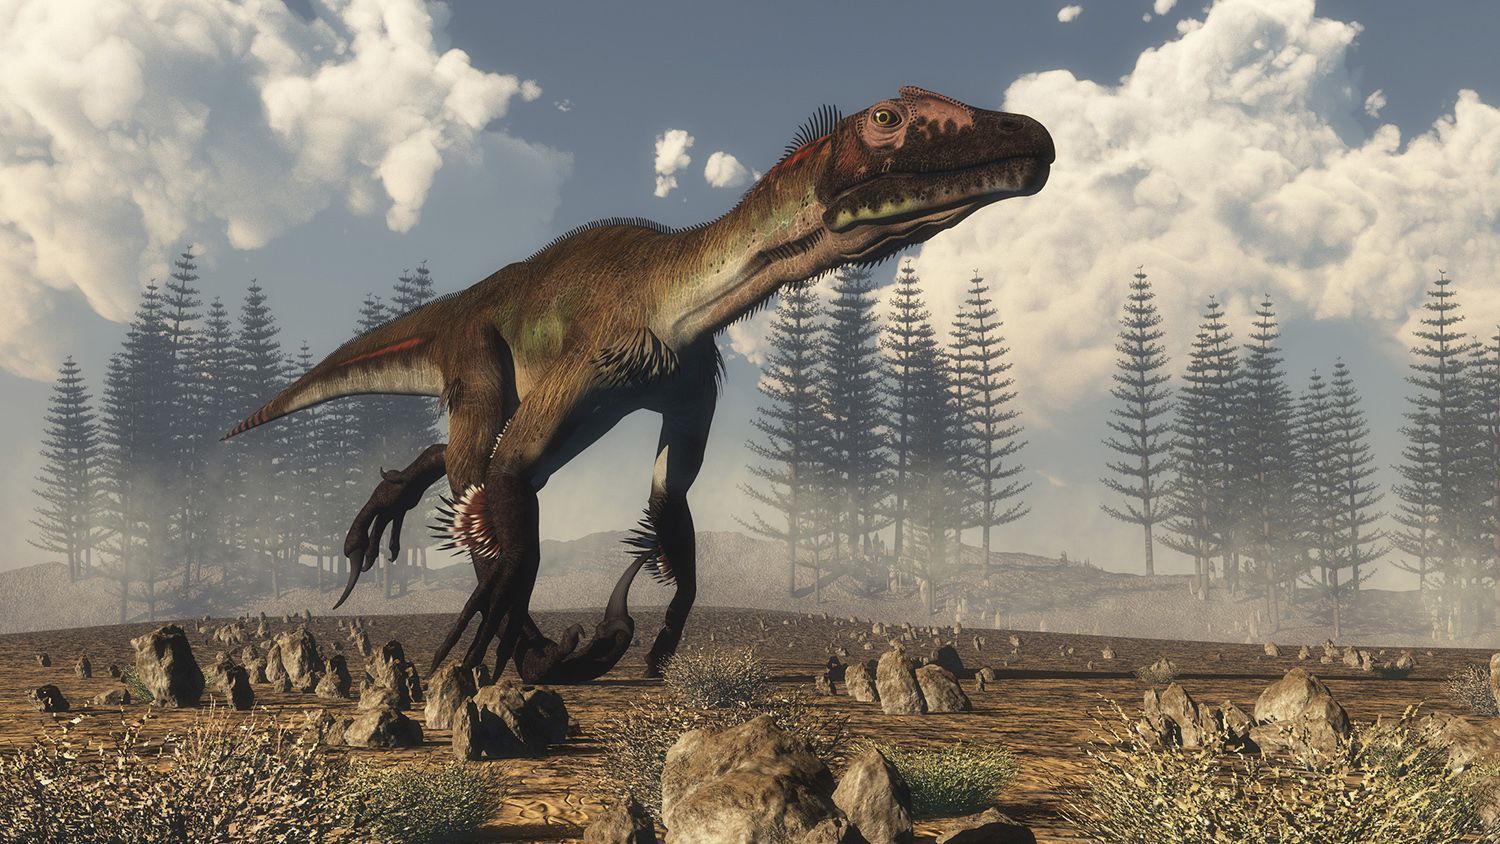 Facts About Utahraptor, the World's Biggest Raptor